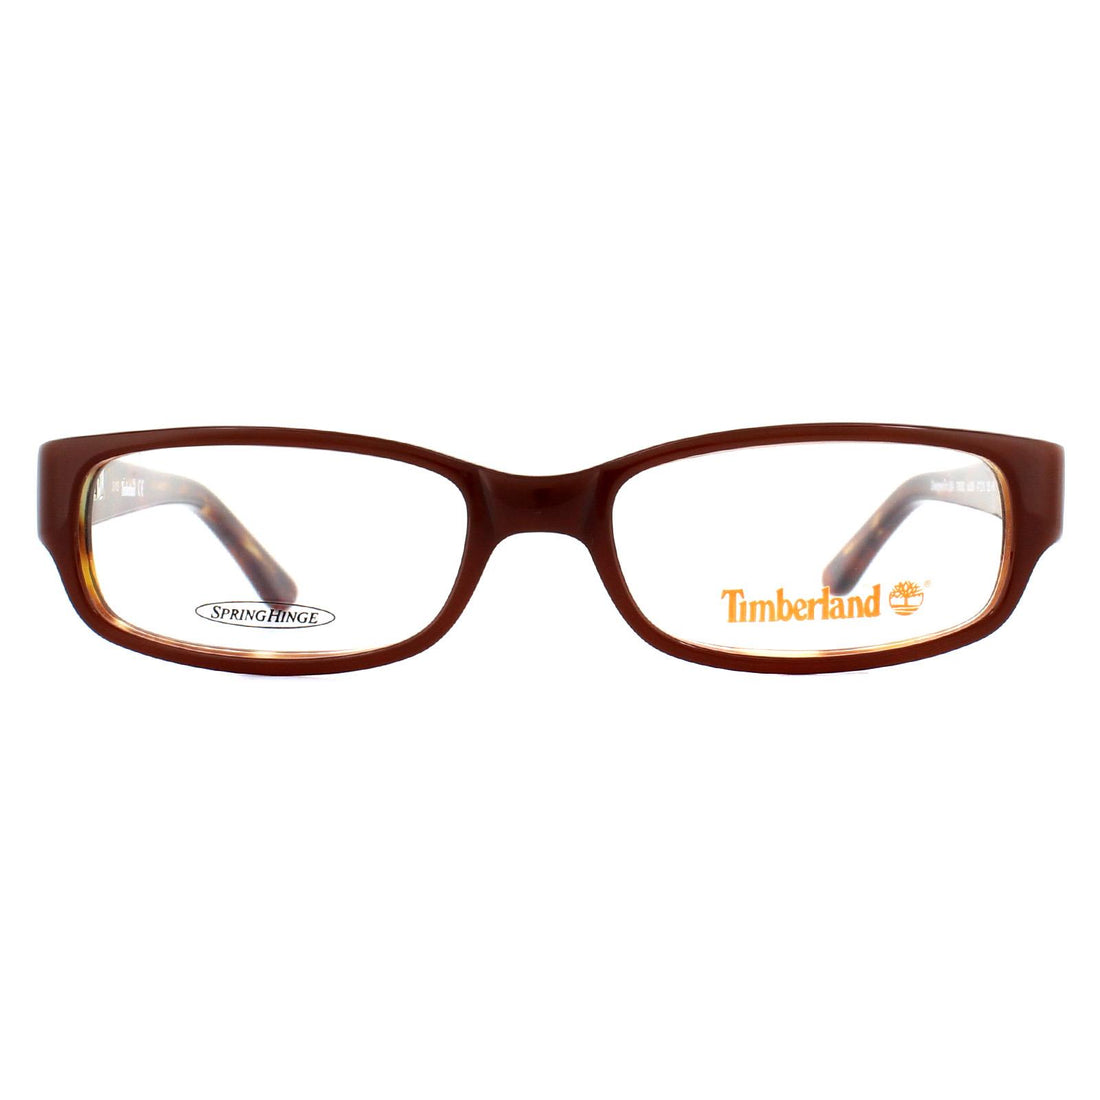 Timberland TB5052 Glasses Frames